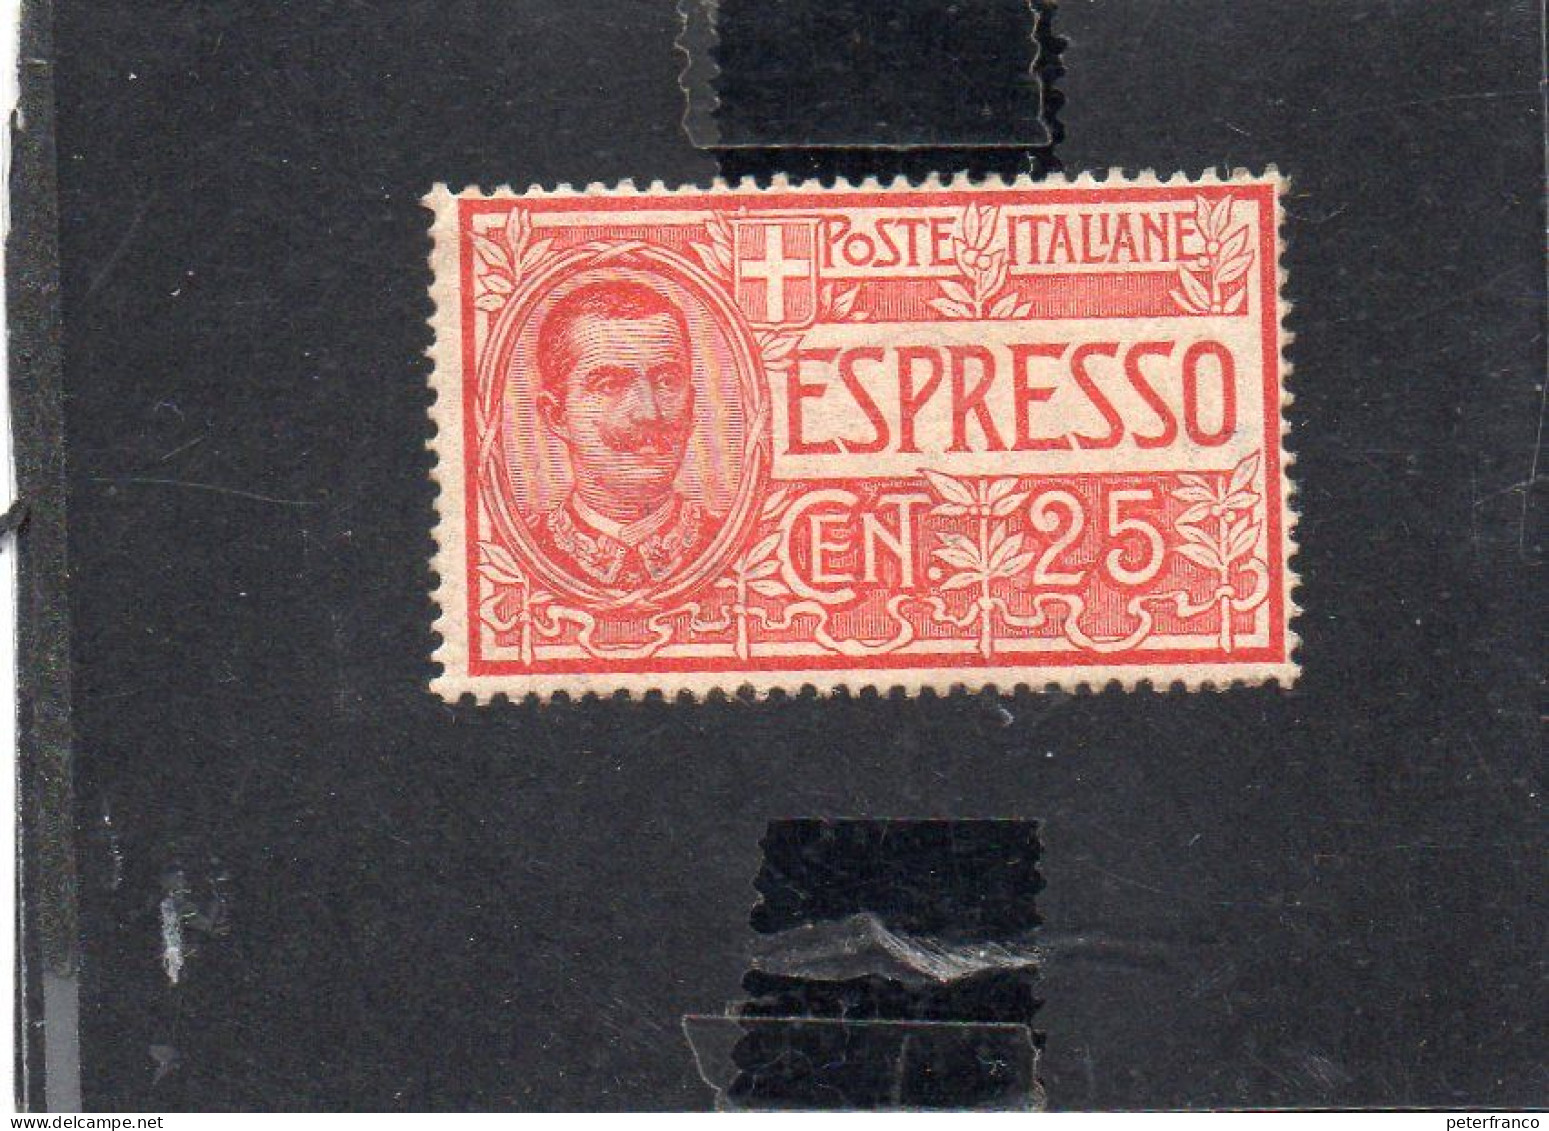 1903 - Italia - Espresso - Eilsendung (Eilpost)